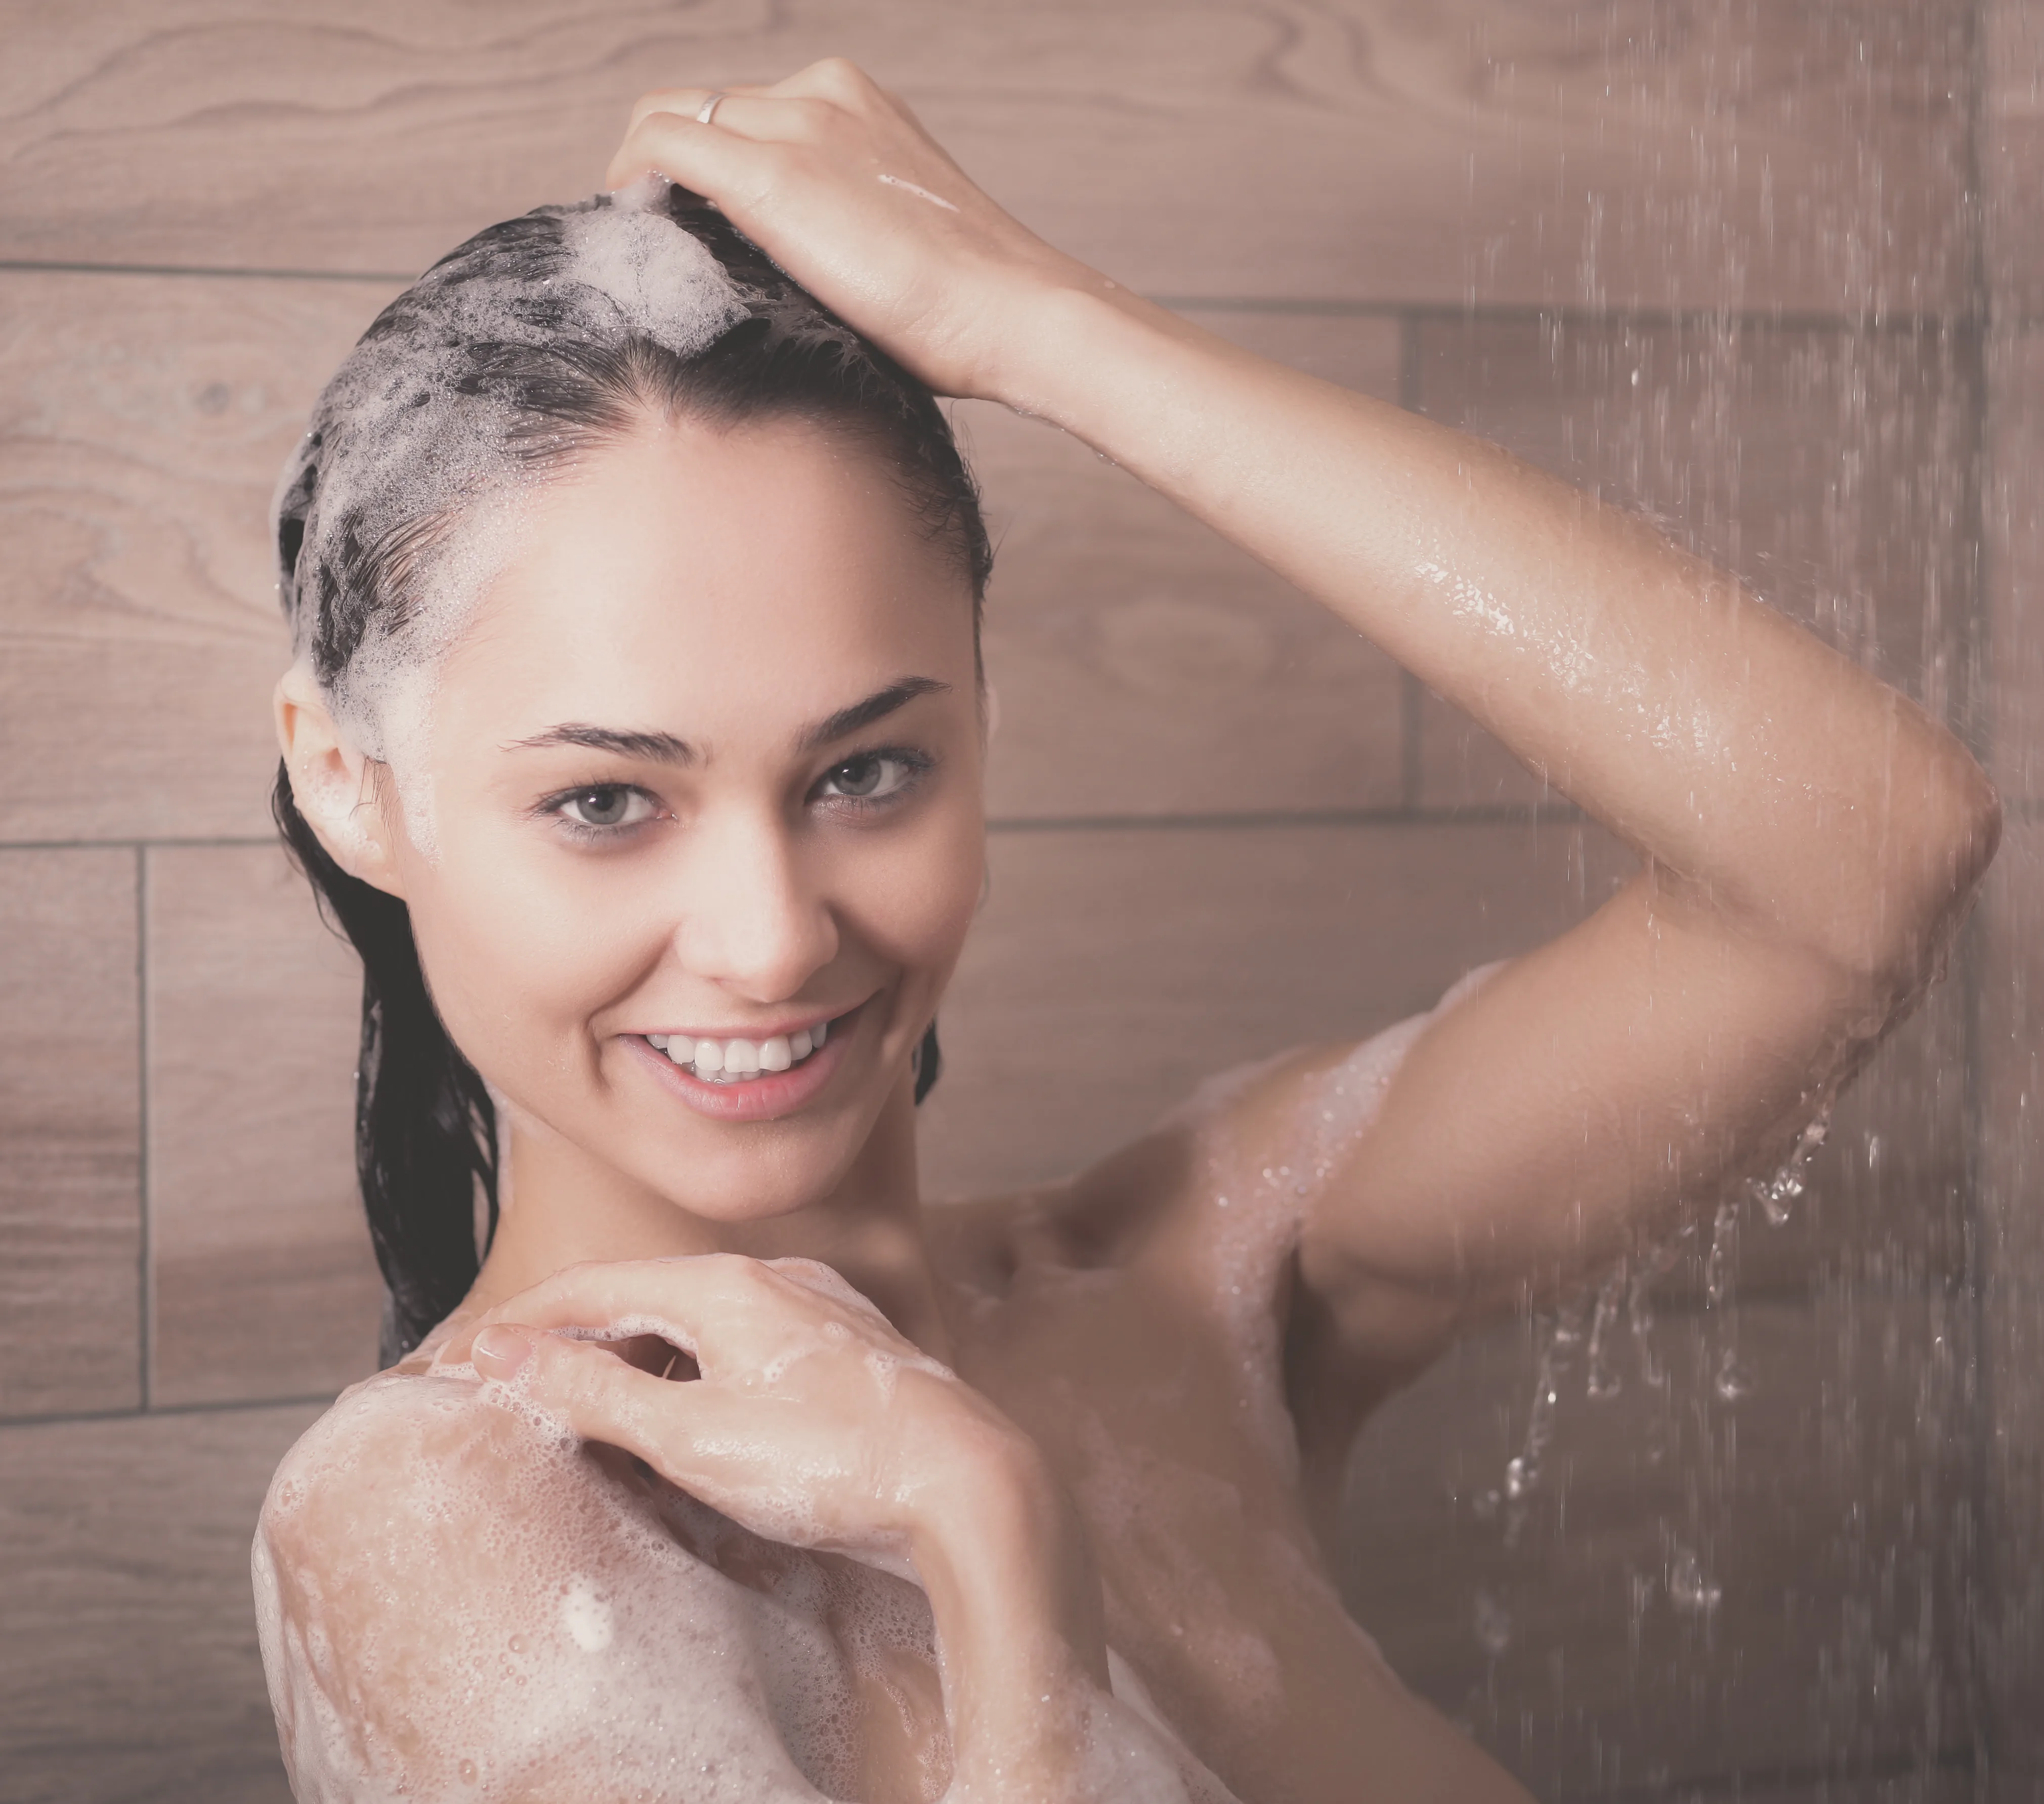 Woman Applying H&S Anti-dandruff Shampoo